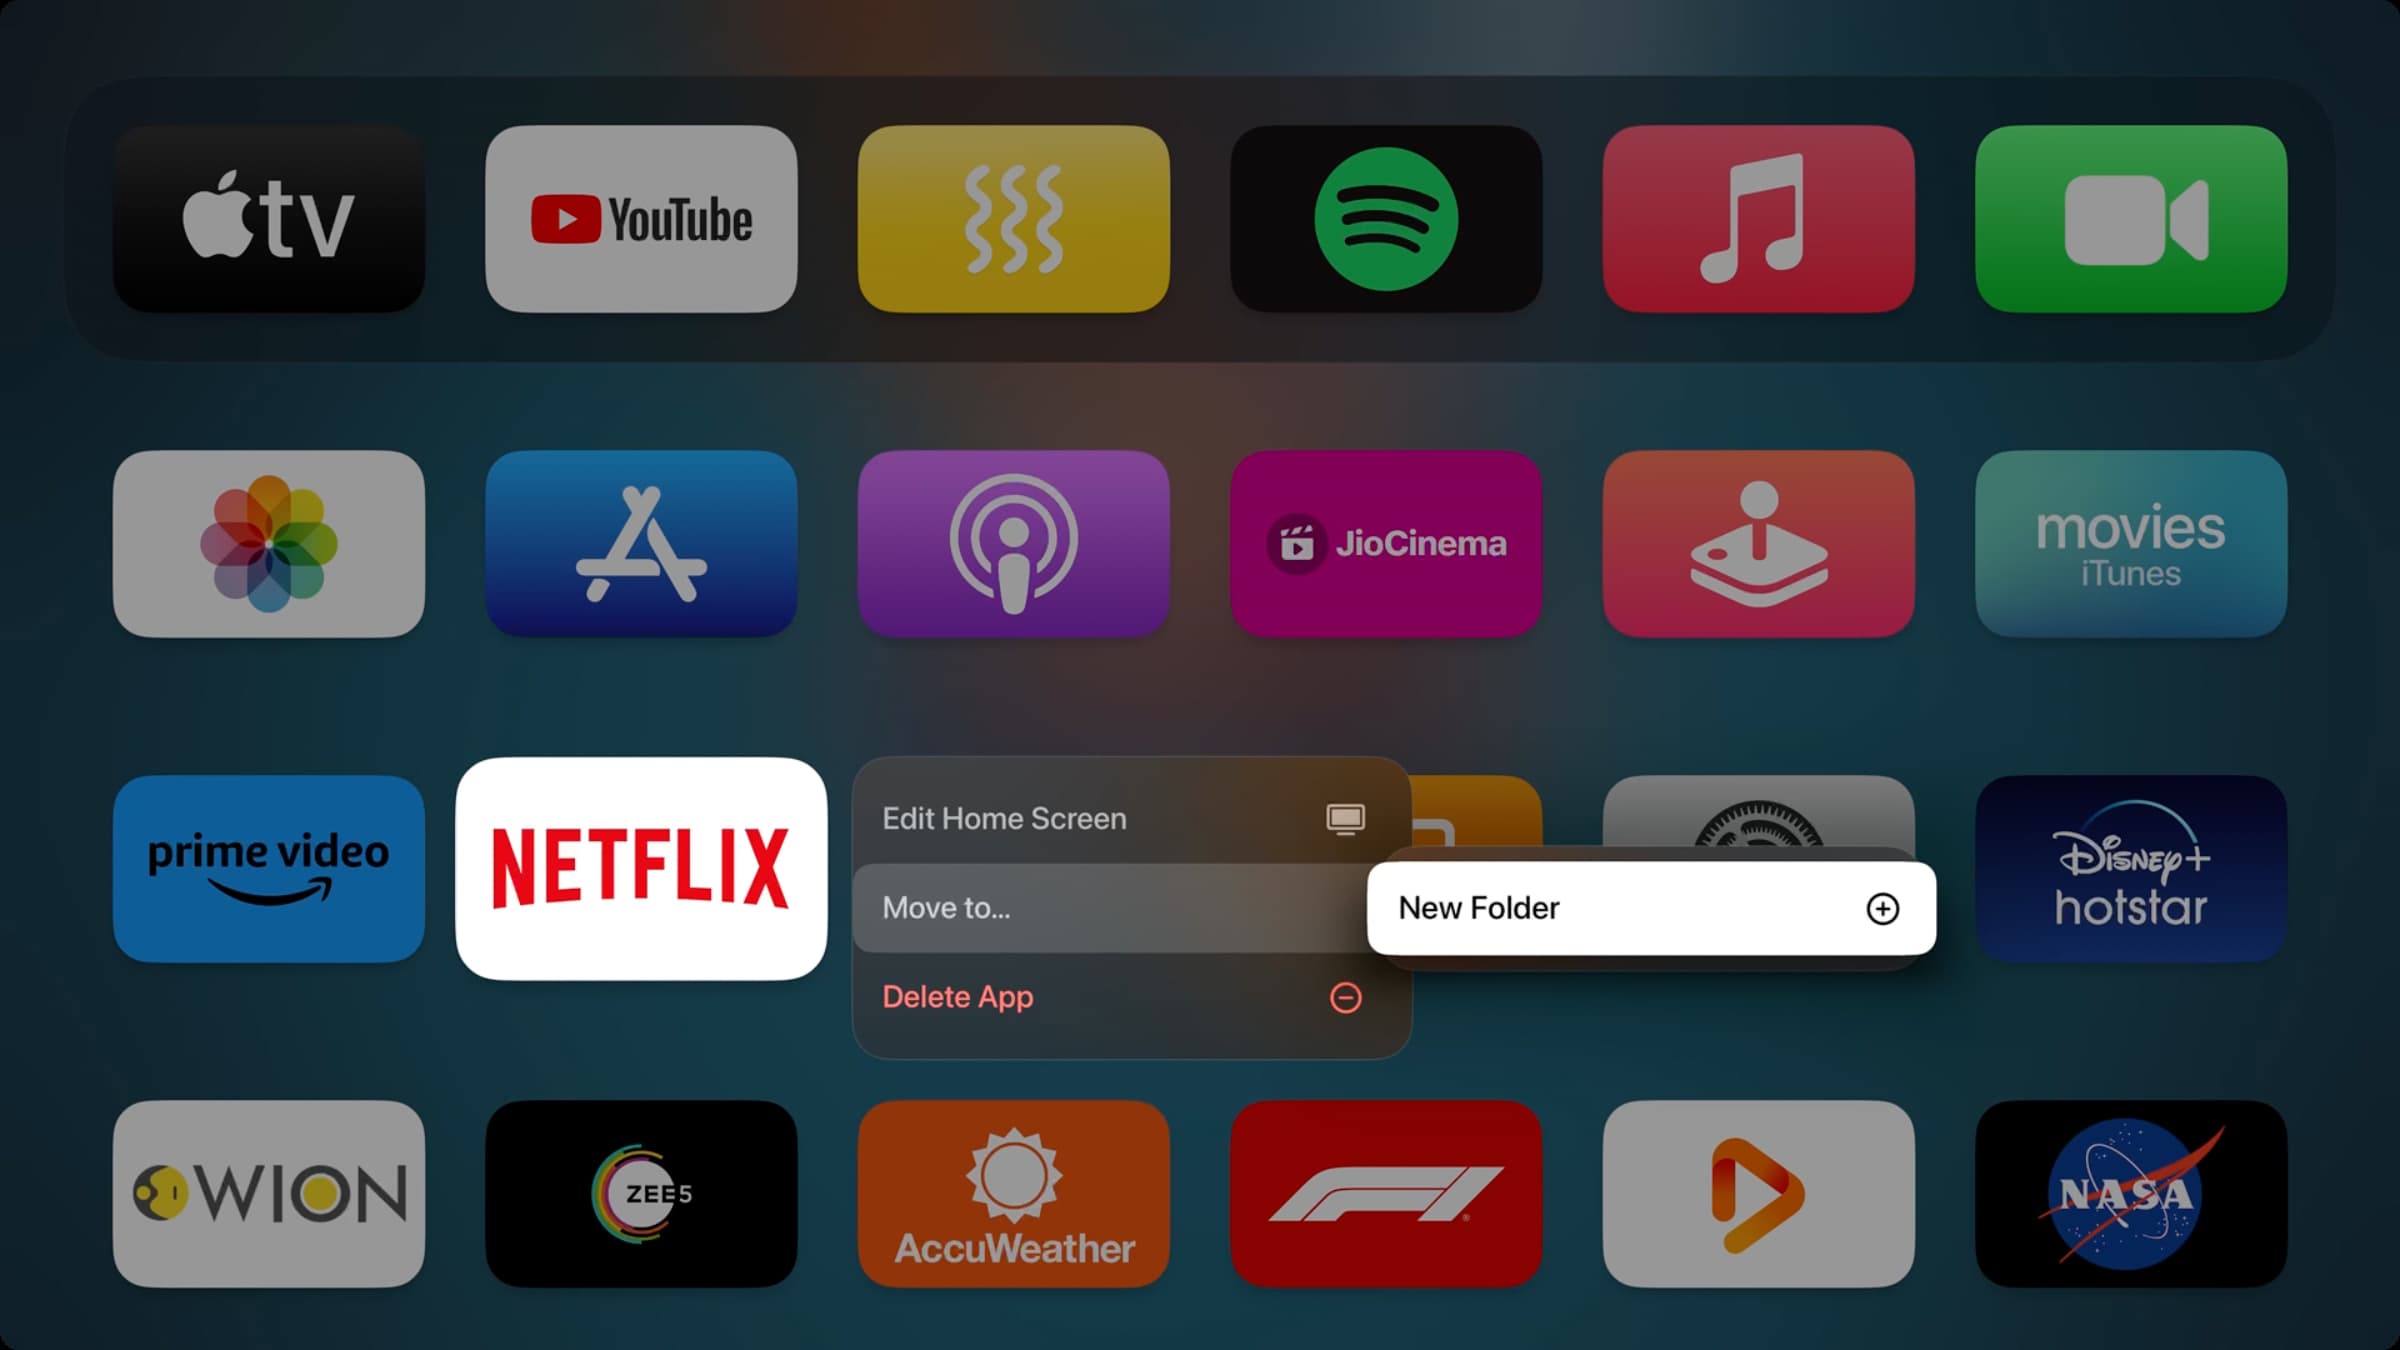 Move app to New Folder on Apple TV